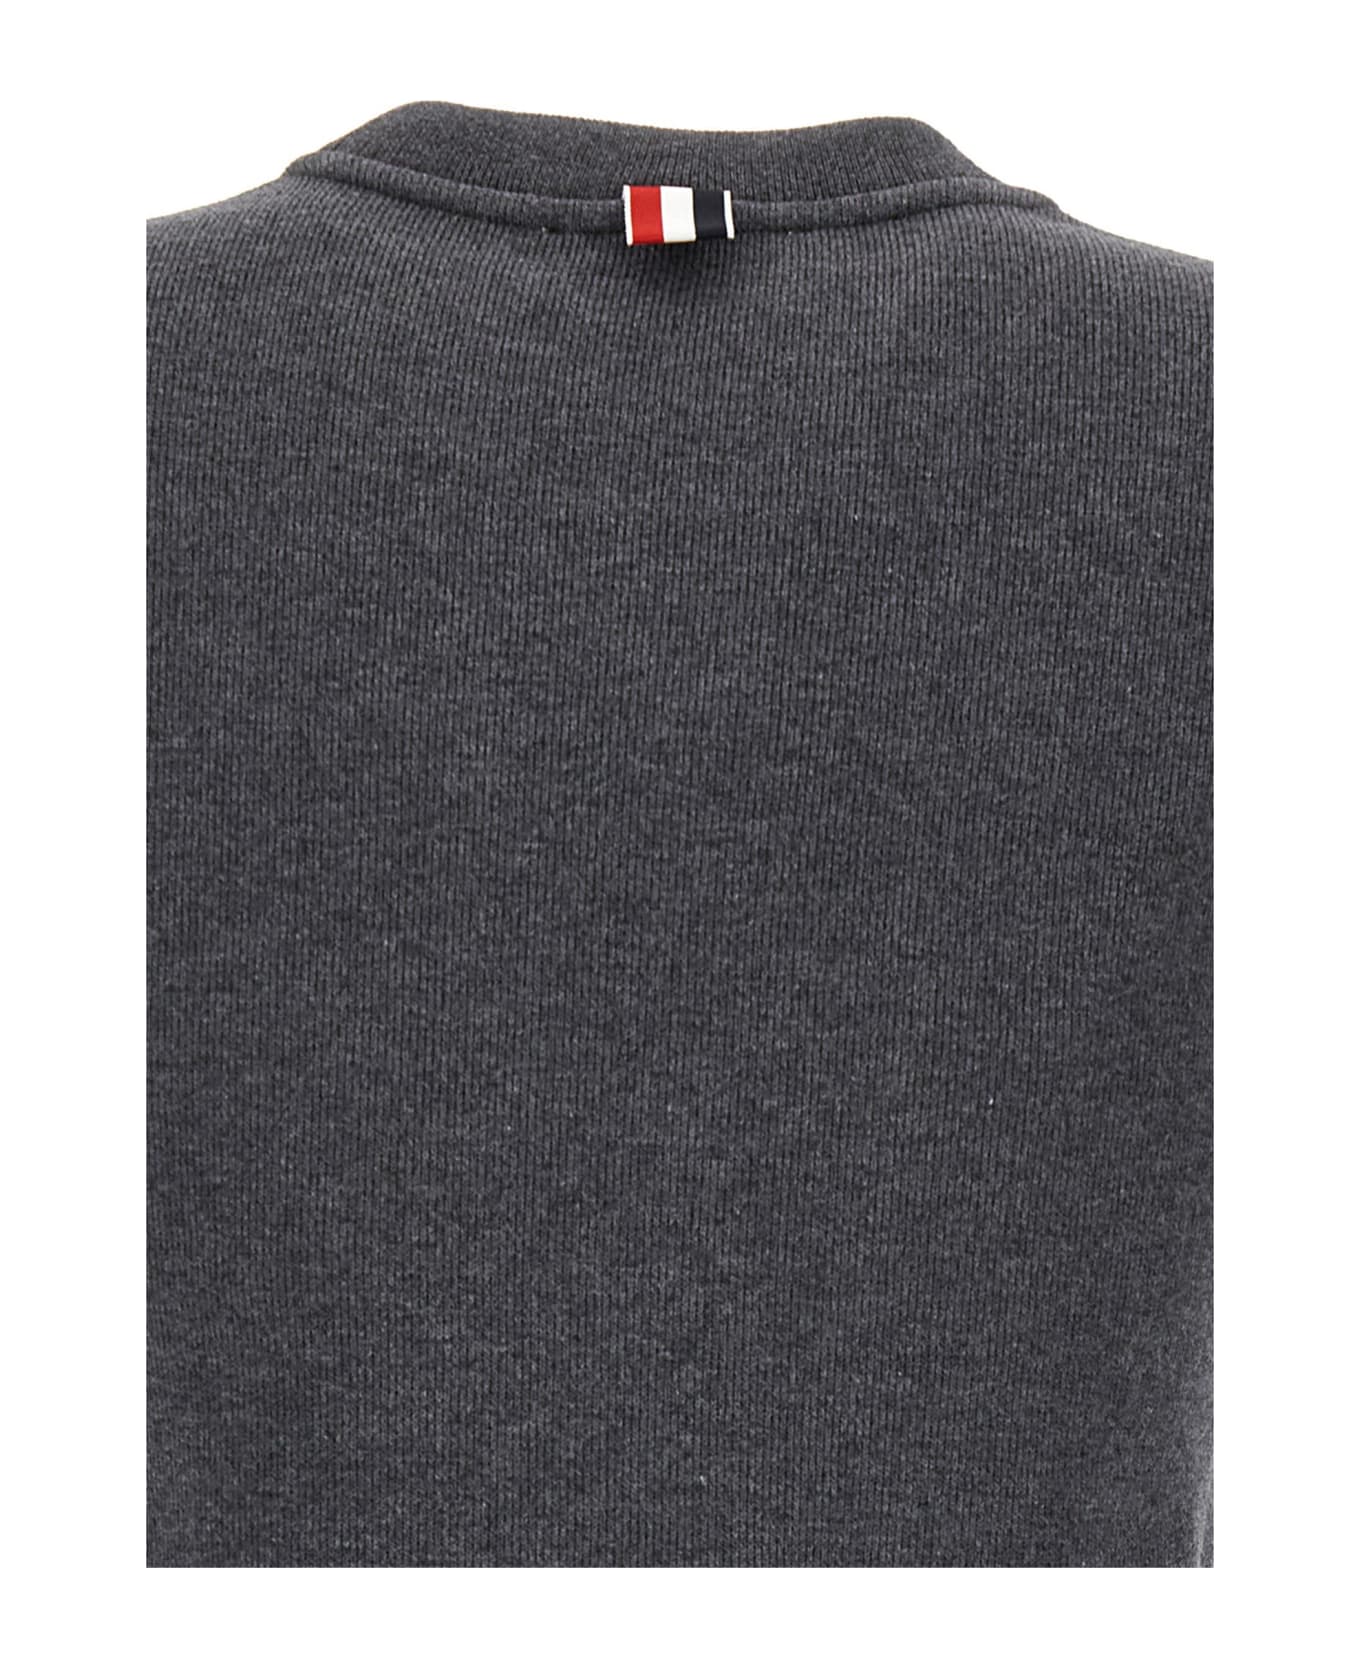 Thom Browne Short Sleeve Sweatshirt - Grey ニットウェア